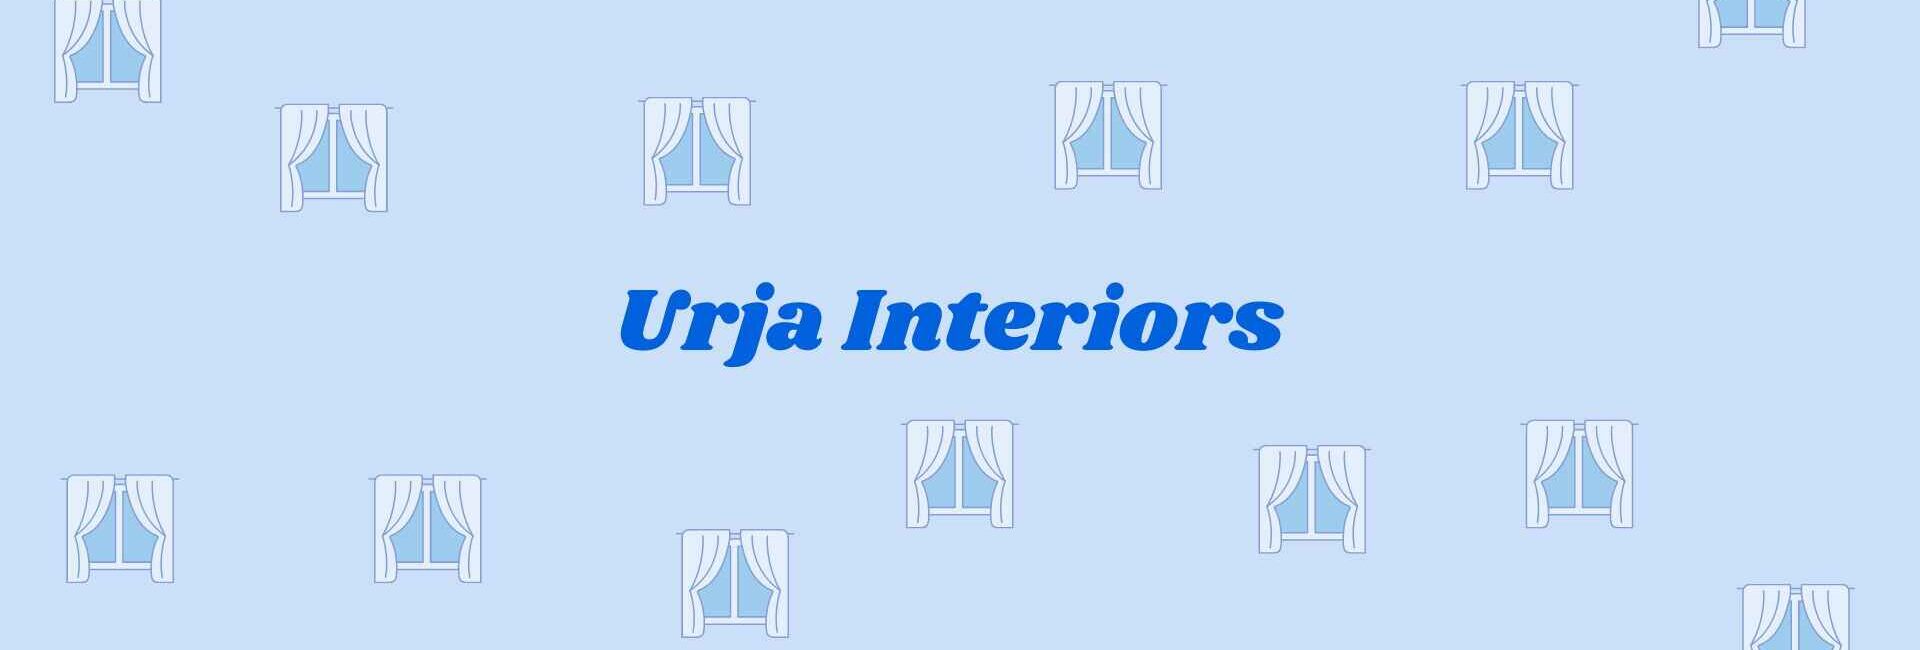 Urja Interiors - home interior dealers in Noida